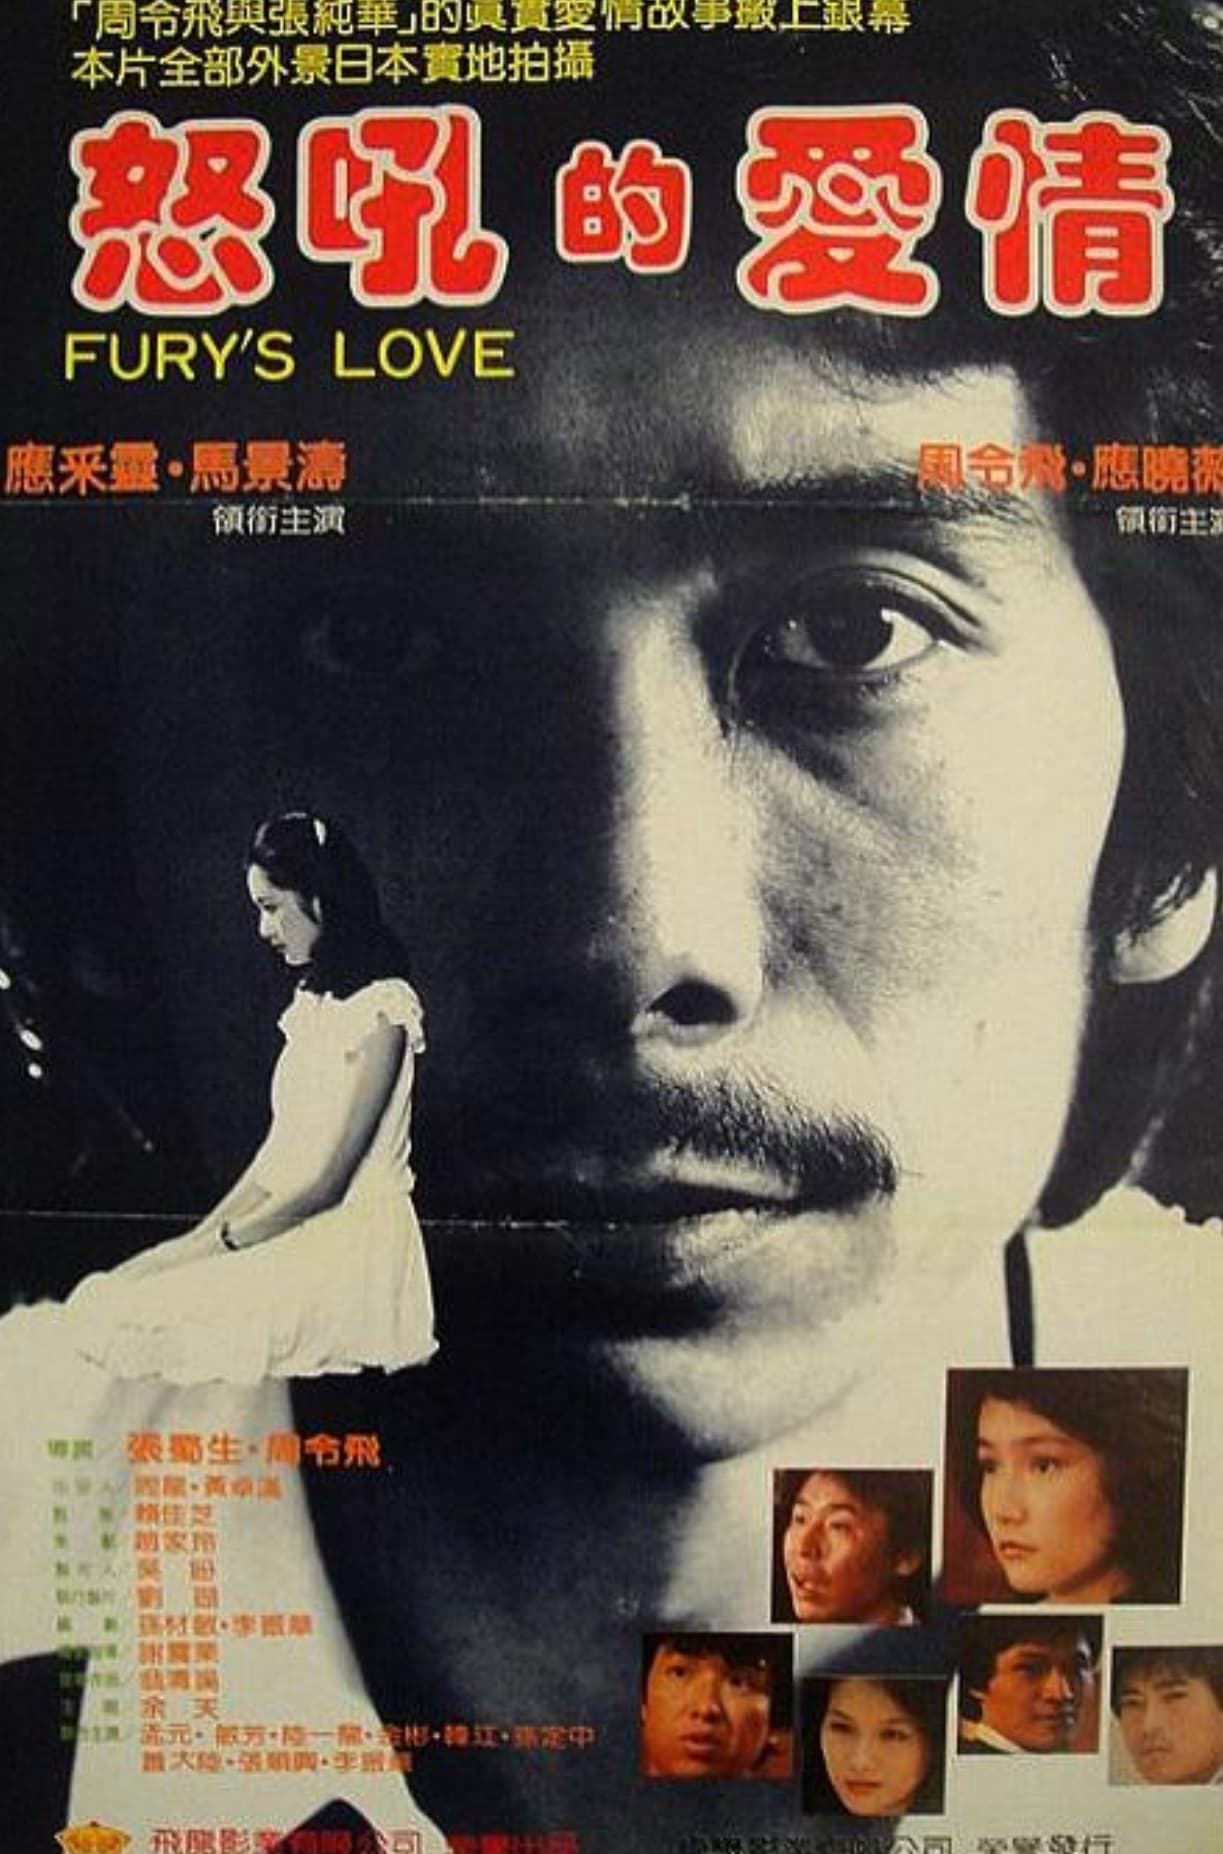 Fury's Love